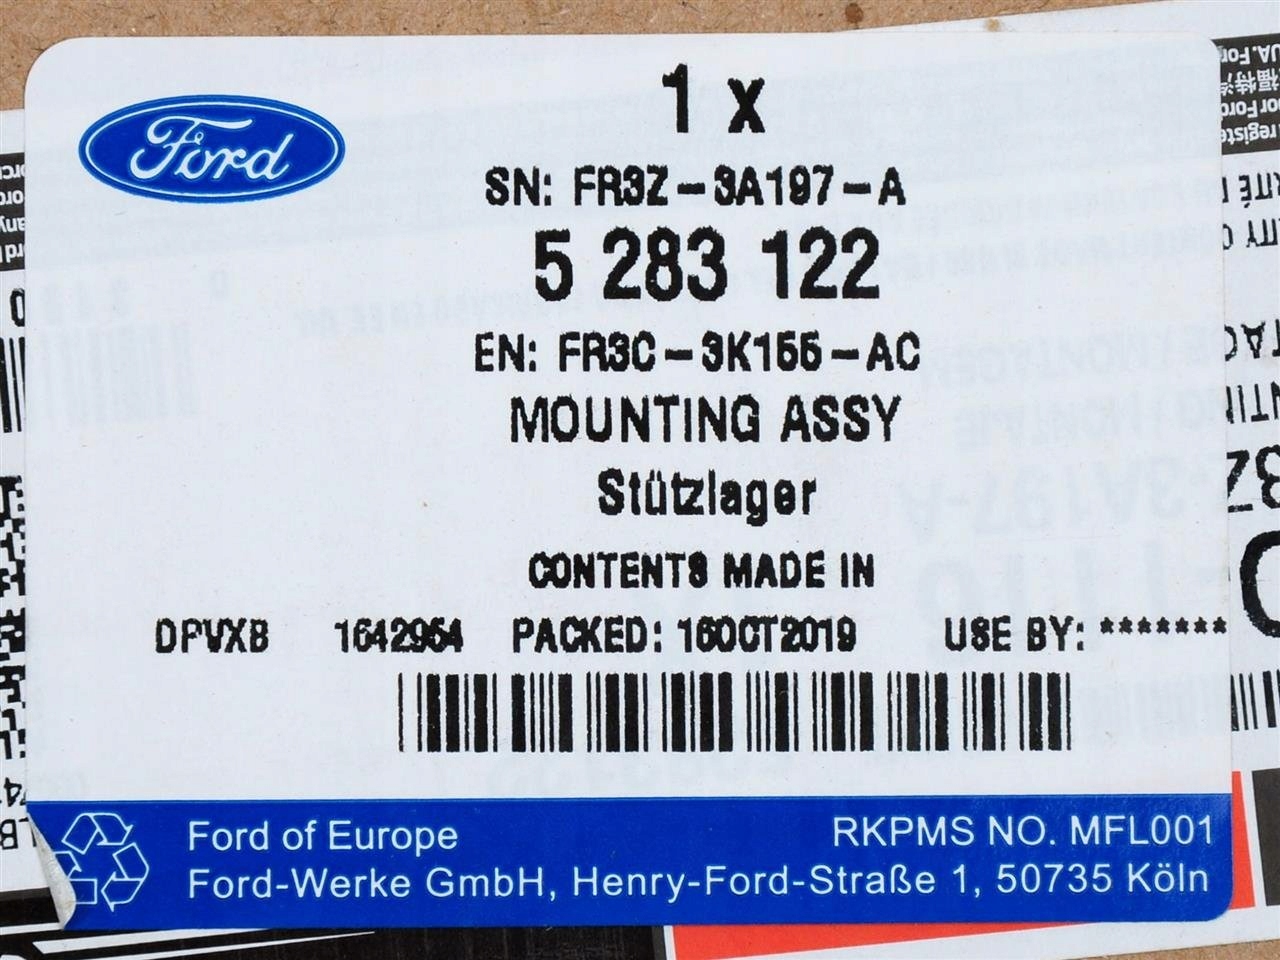 OBSADA AMORTYZATORA MUSTANG 15- PRZÓD RH/LH _ 5283122 Producent części Ford OE